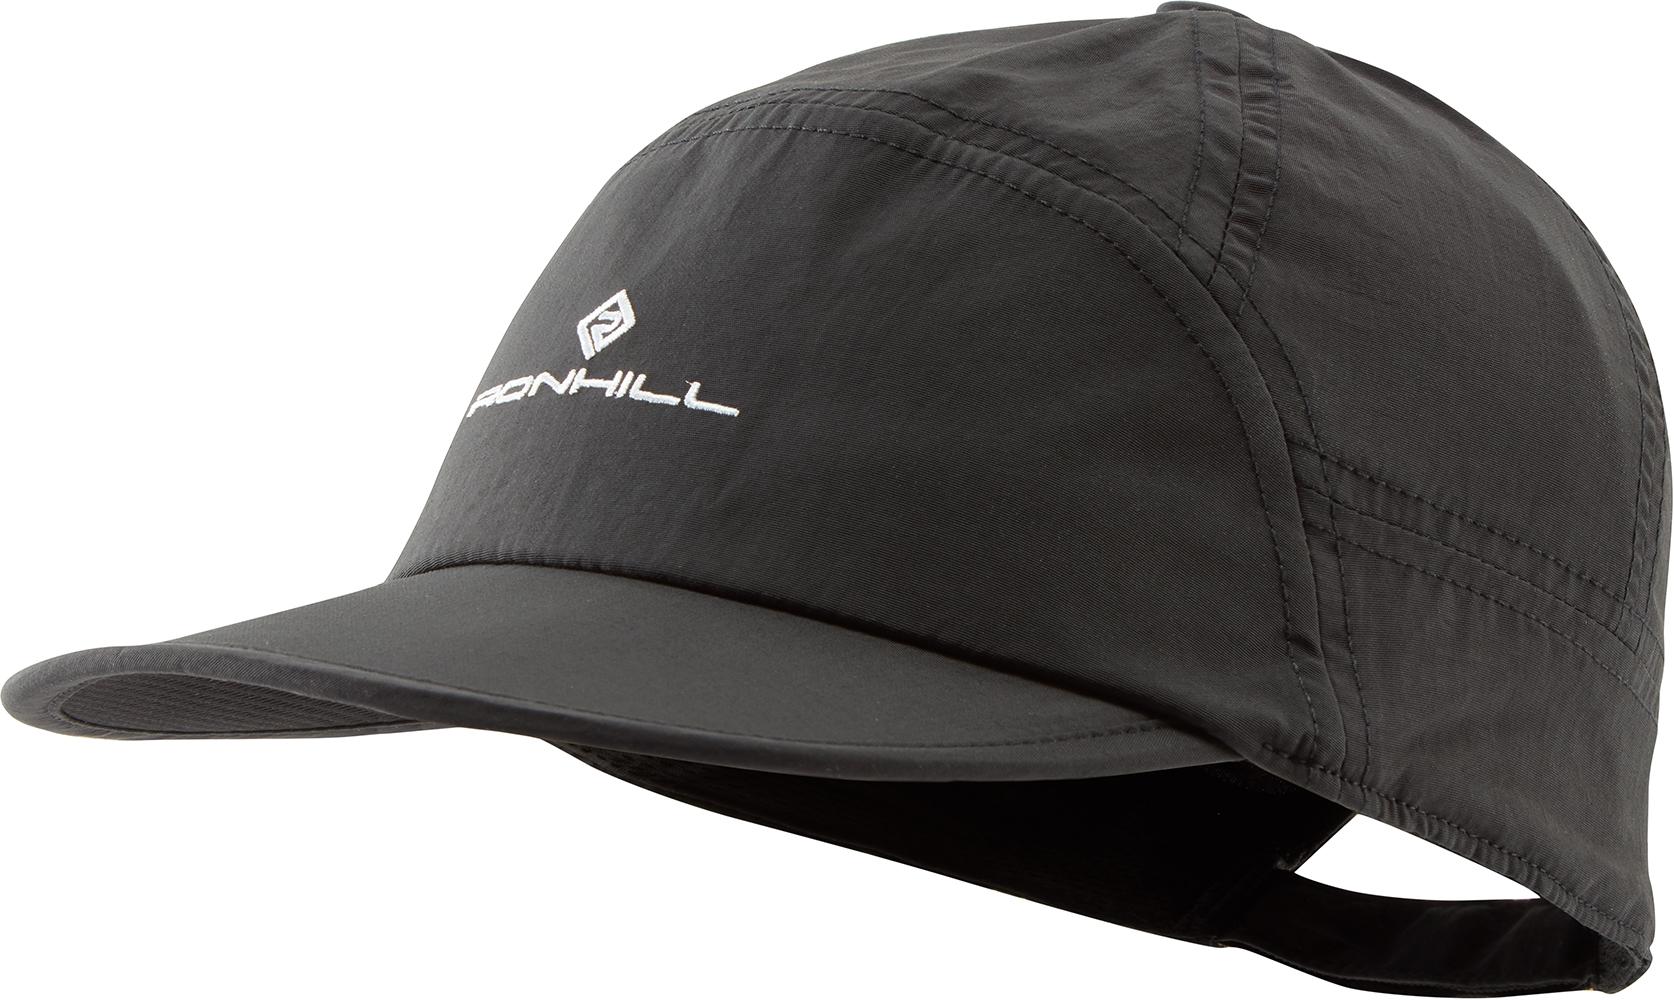 Ronhill Sun Cap - All Black